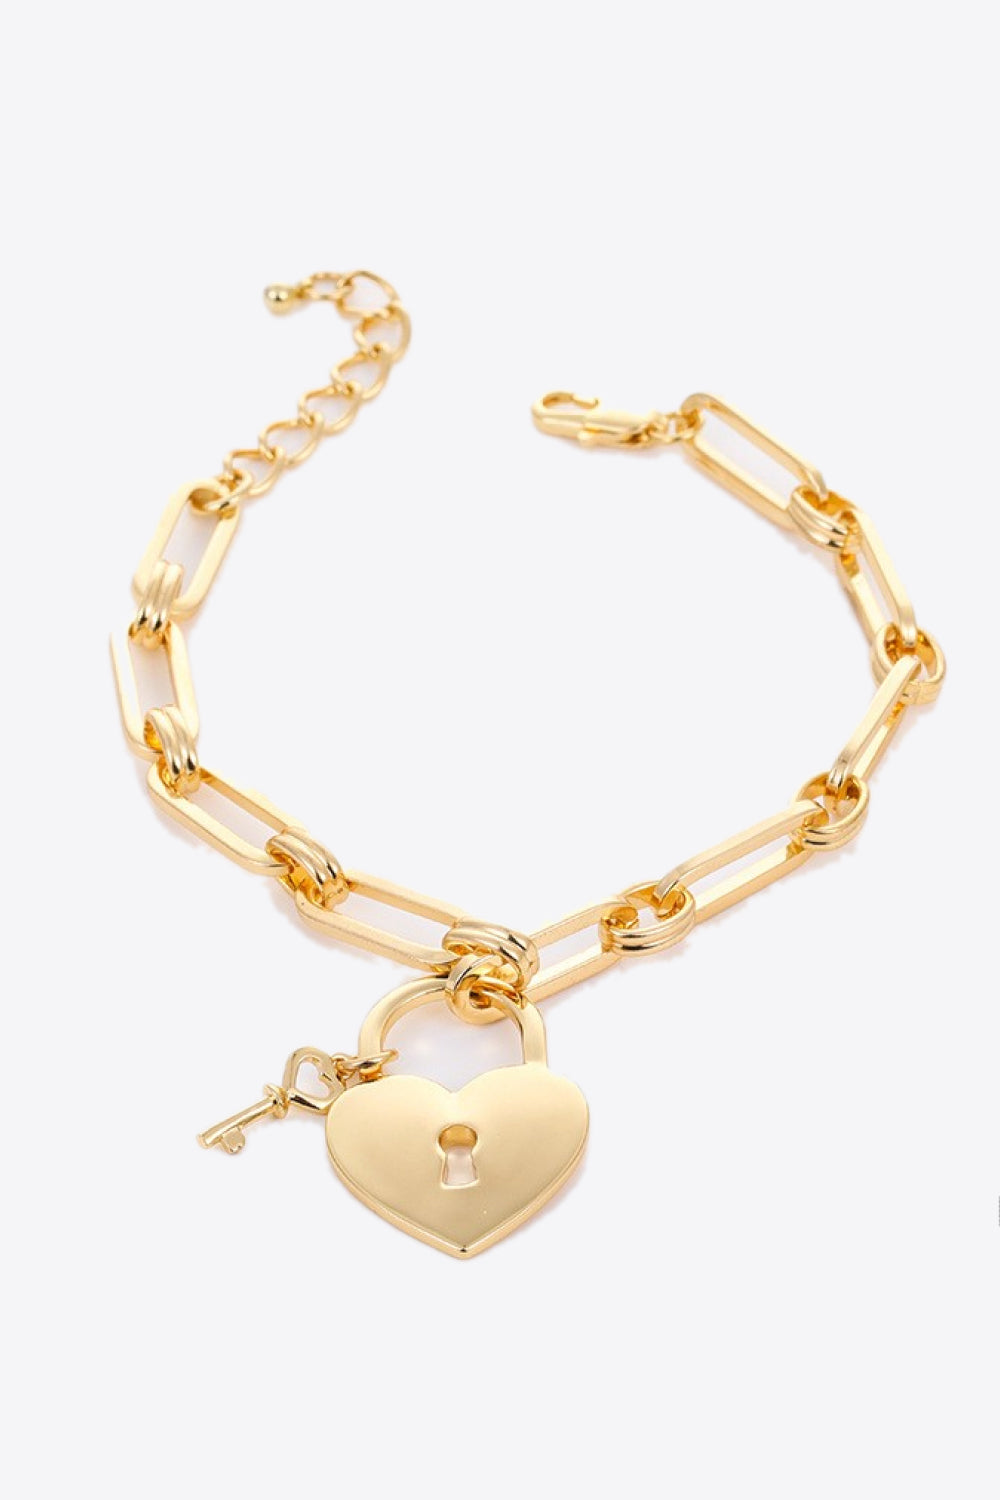 5-Piece Heart Lock Charm Chain Bracelet - Gold / One Size - Women’s Jewelry - Bracelets - 1 - 2024